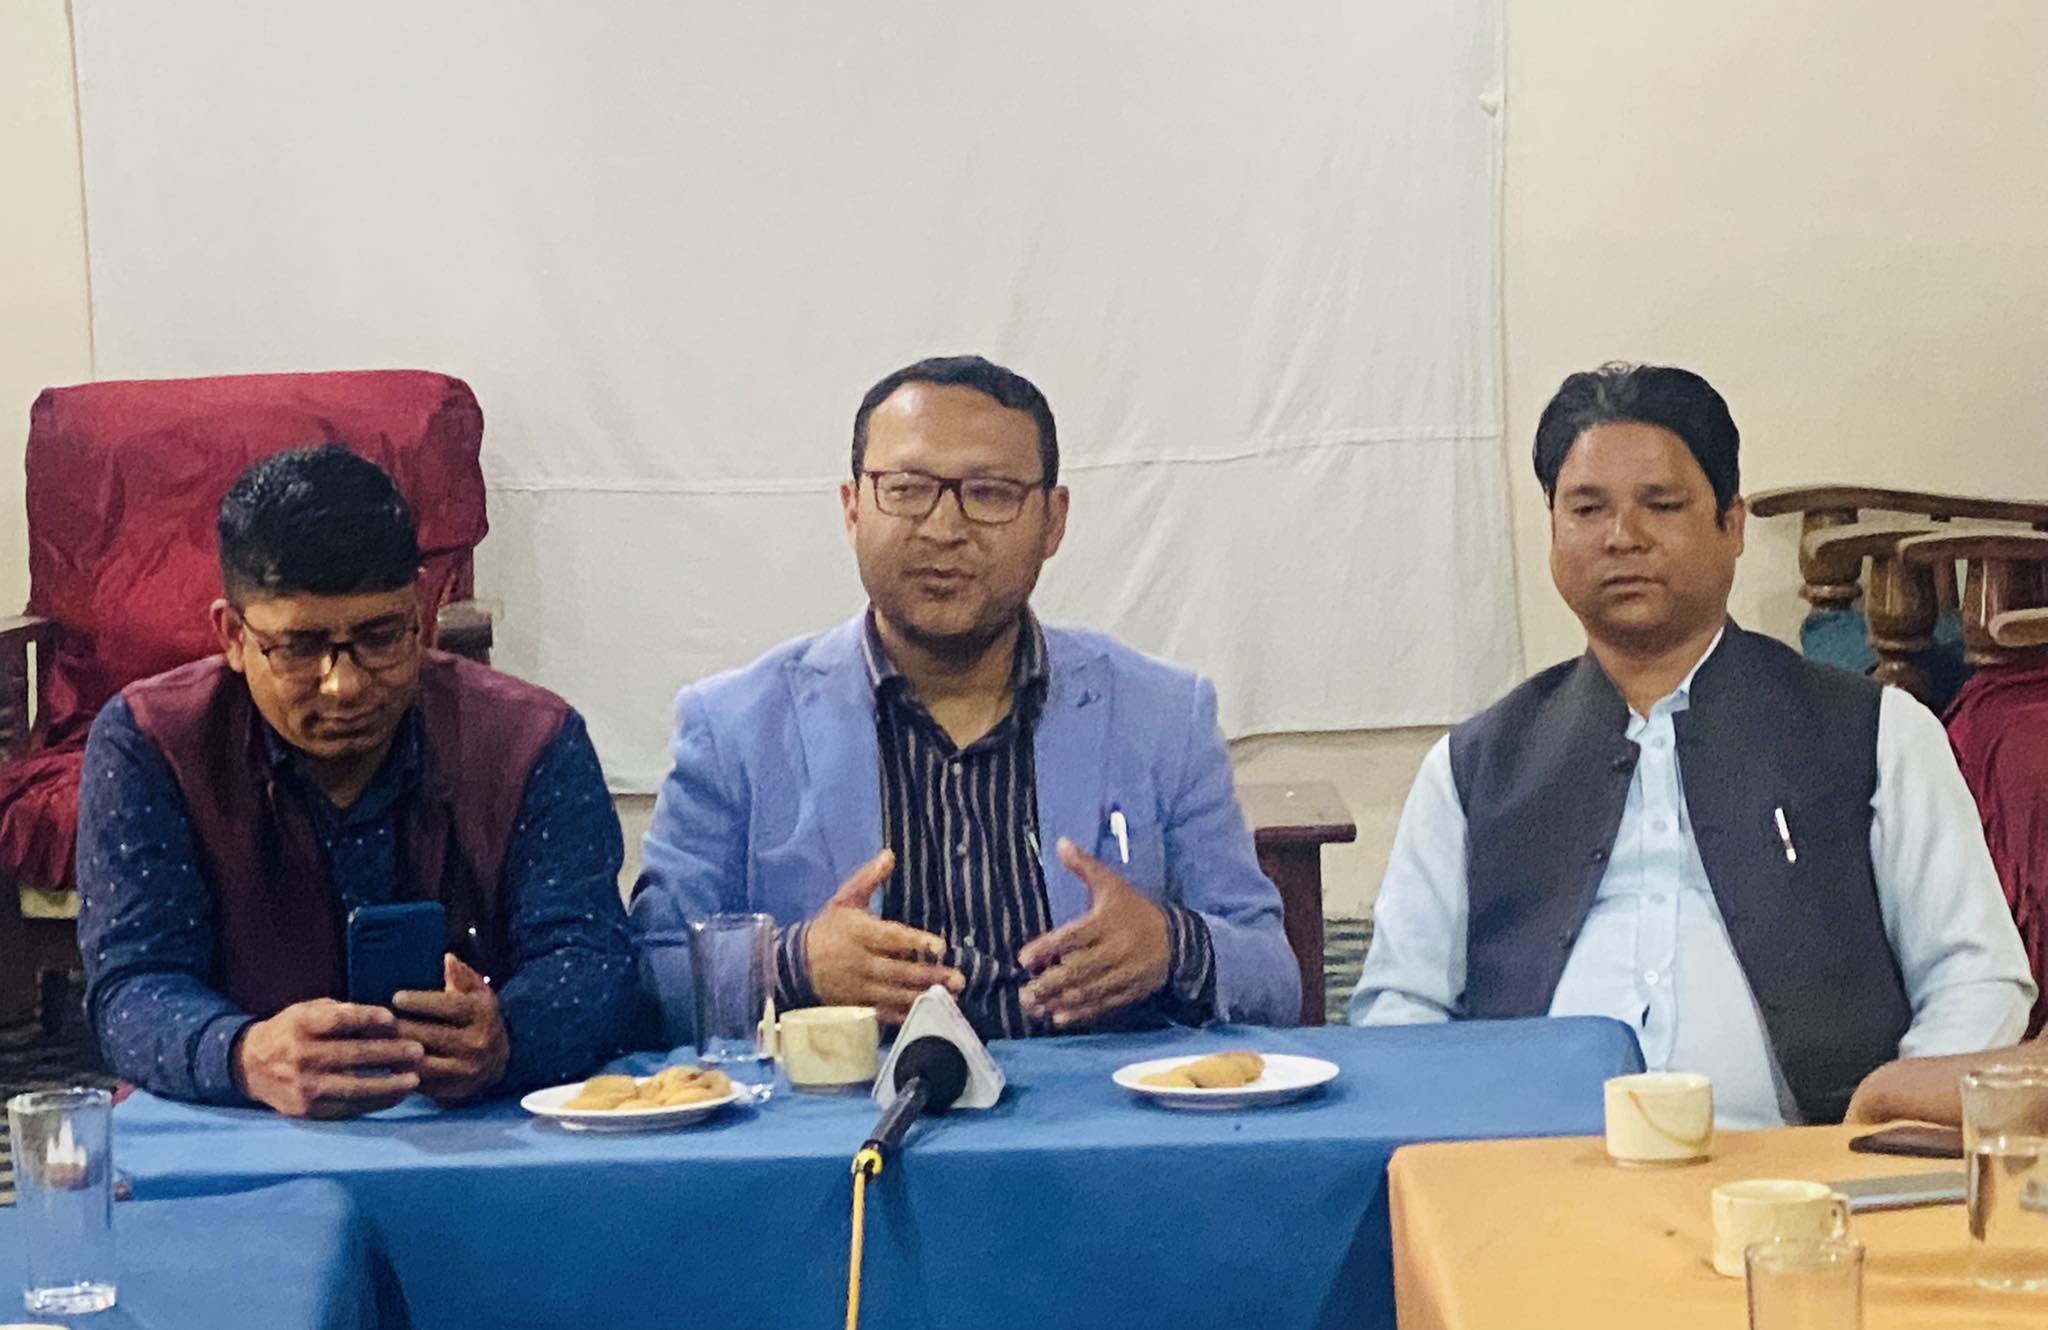 नेपाली कांग्रेस युवा नेता शाहीको नेतृत्वमा कर्णालीमा संगठन सुदृढ यात्रा अभियान सञ्चालन हुँदै